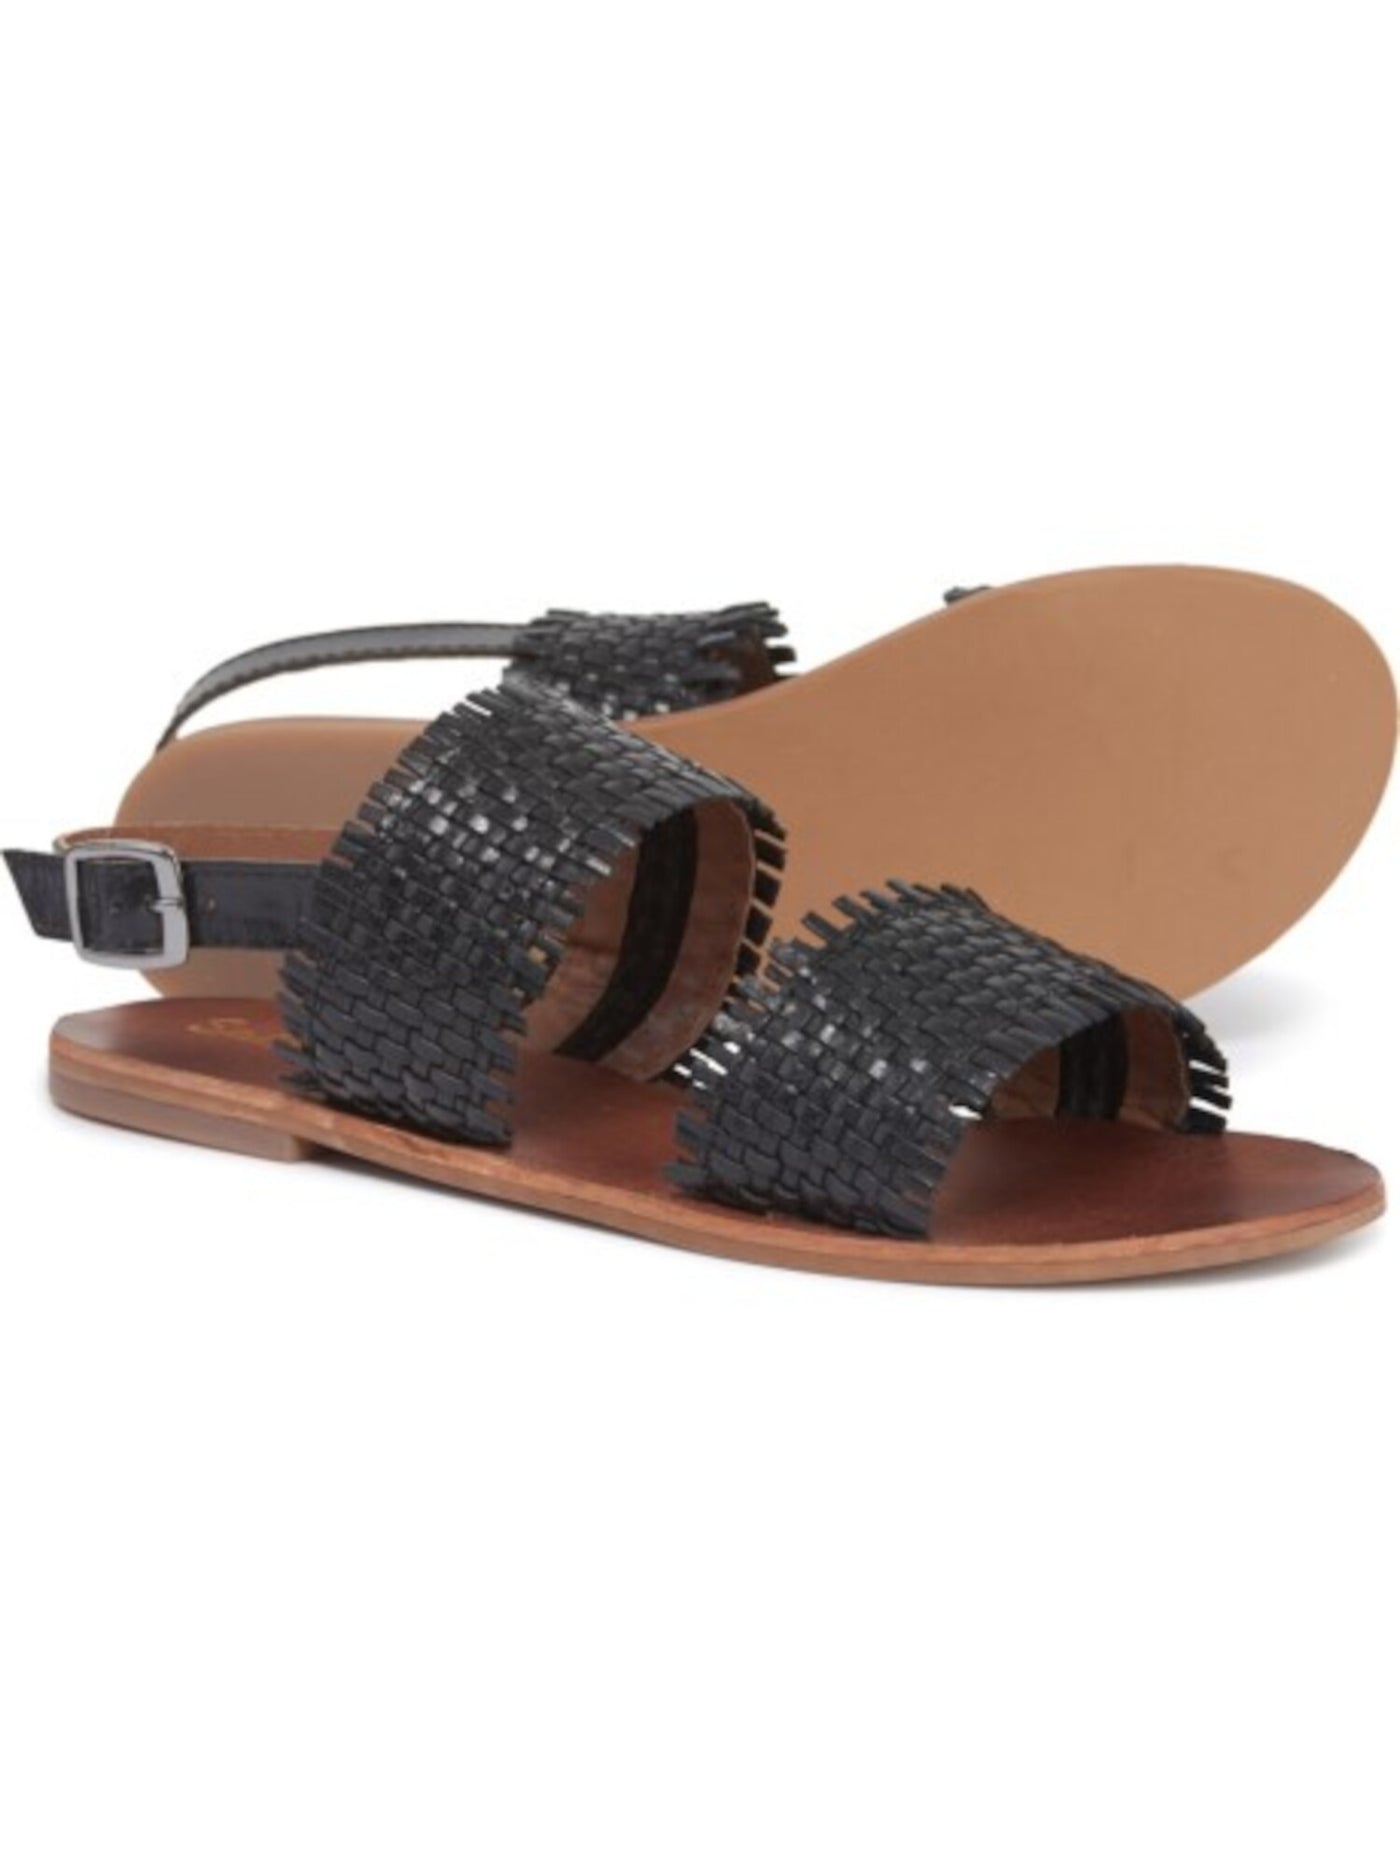 SPLENDID Womens Black Woven Adjustable Strap Thomas Round Toe Block Heel Buckle Leather Sandals Shoes 5.5